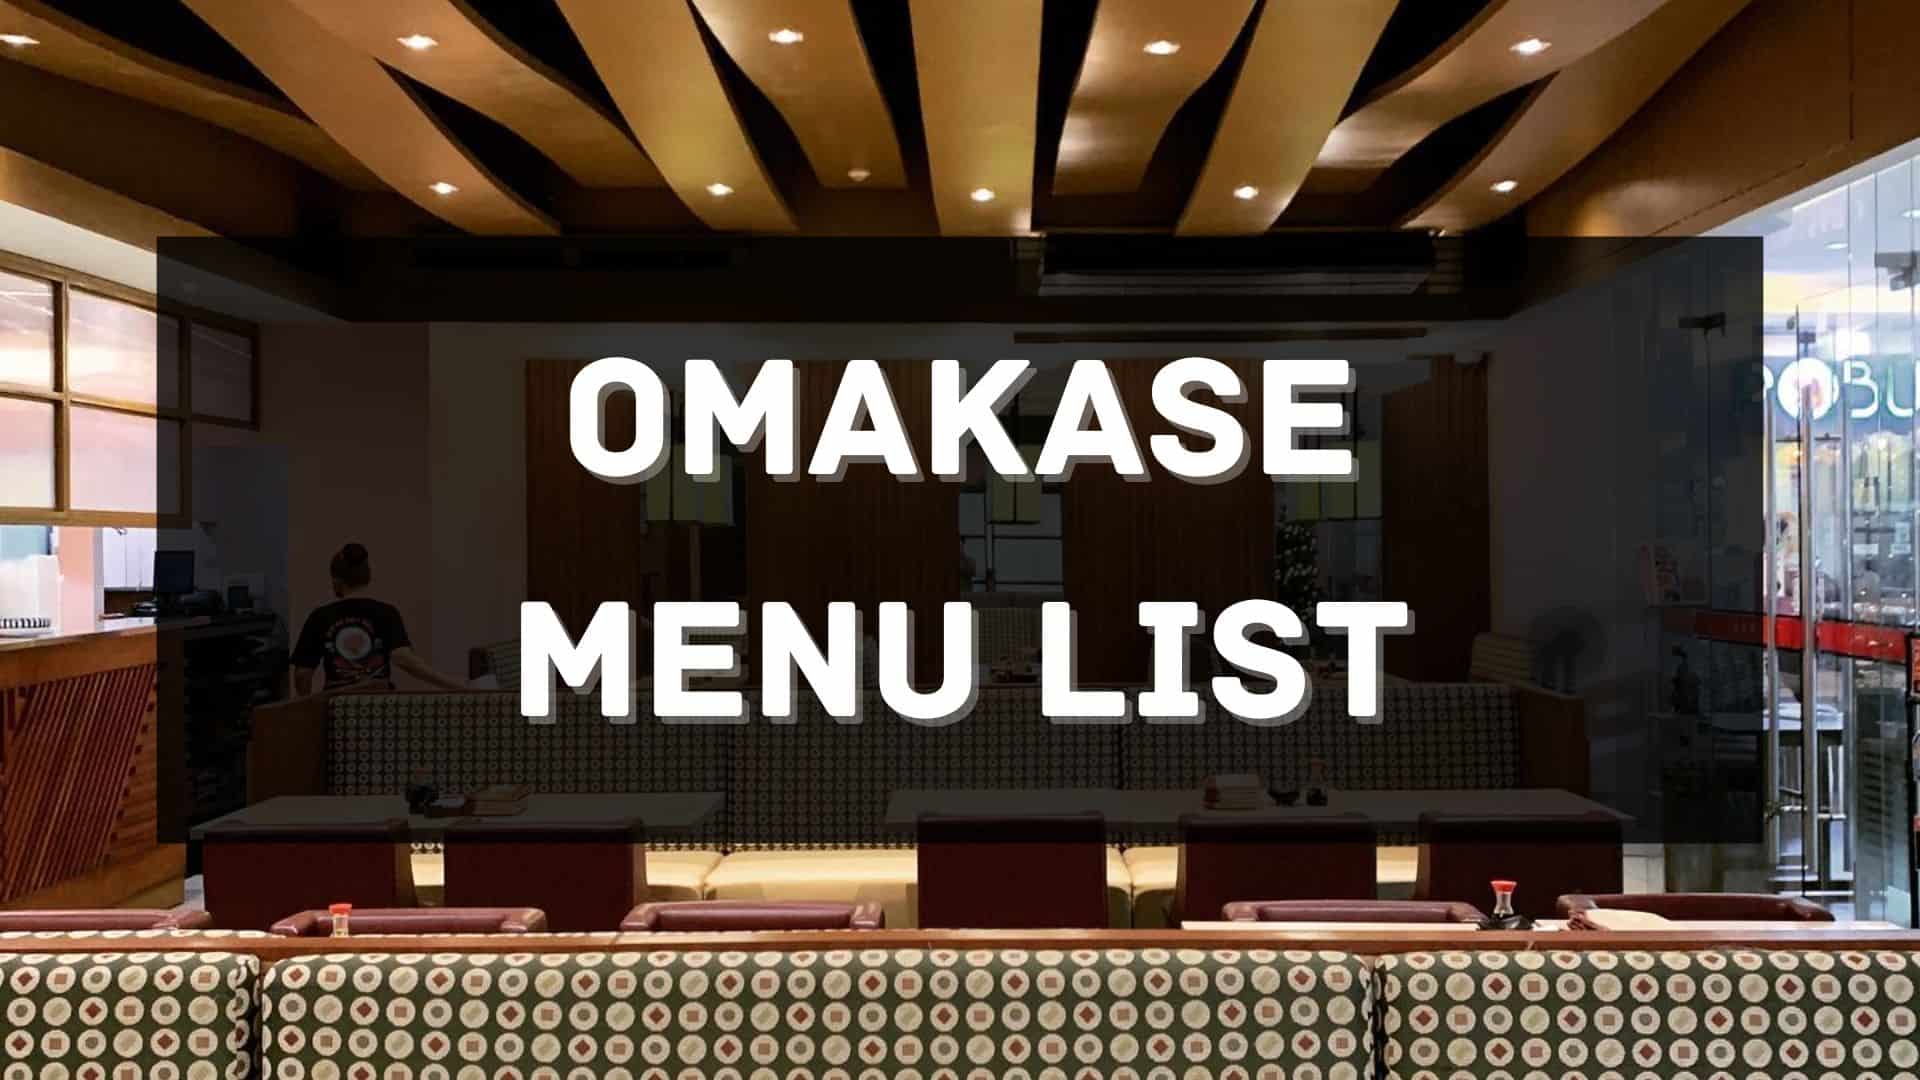 omakase menu prices philippines